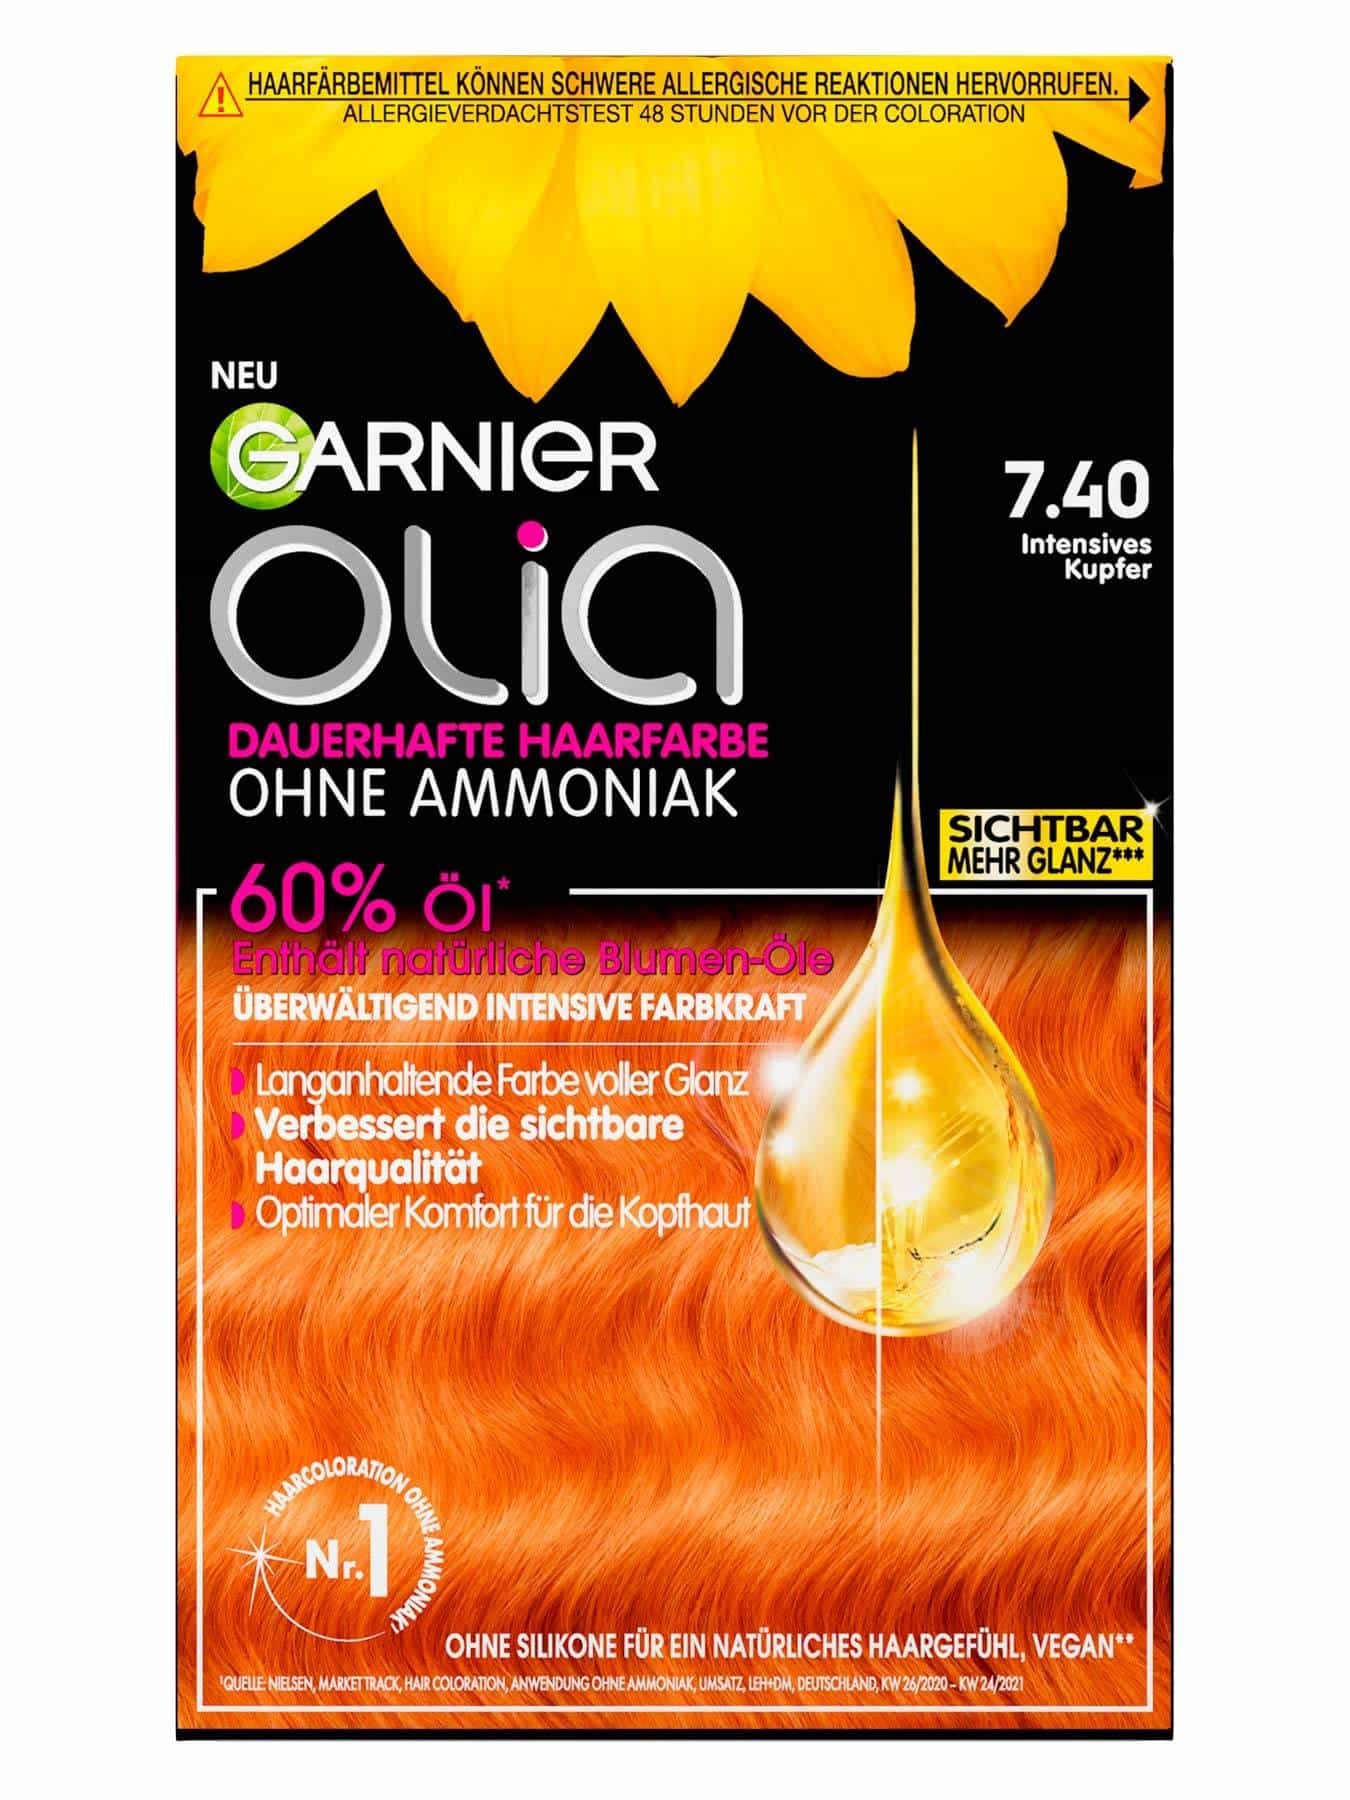 Olia Nr. 7.40 Intensives Kupfer – dauerhafte Haarfarbe | Garnier